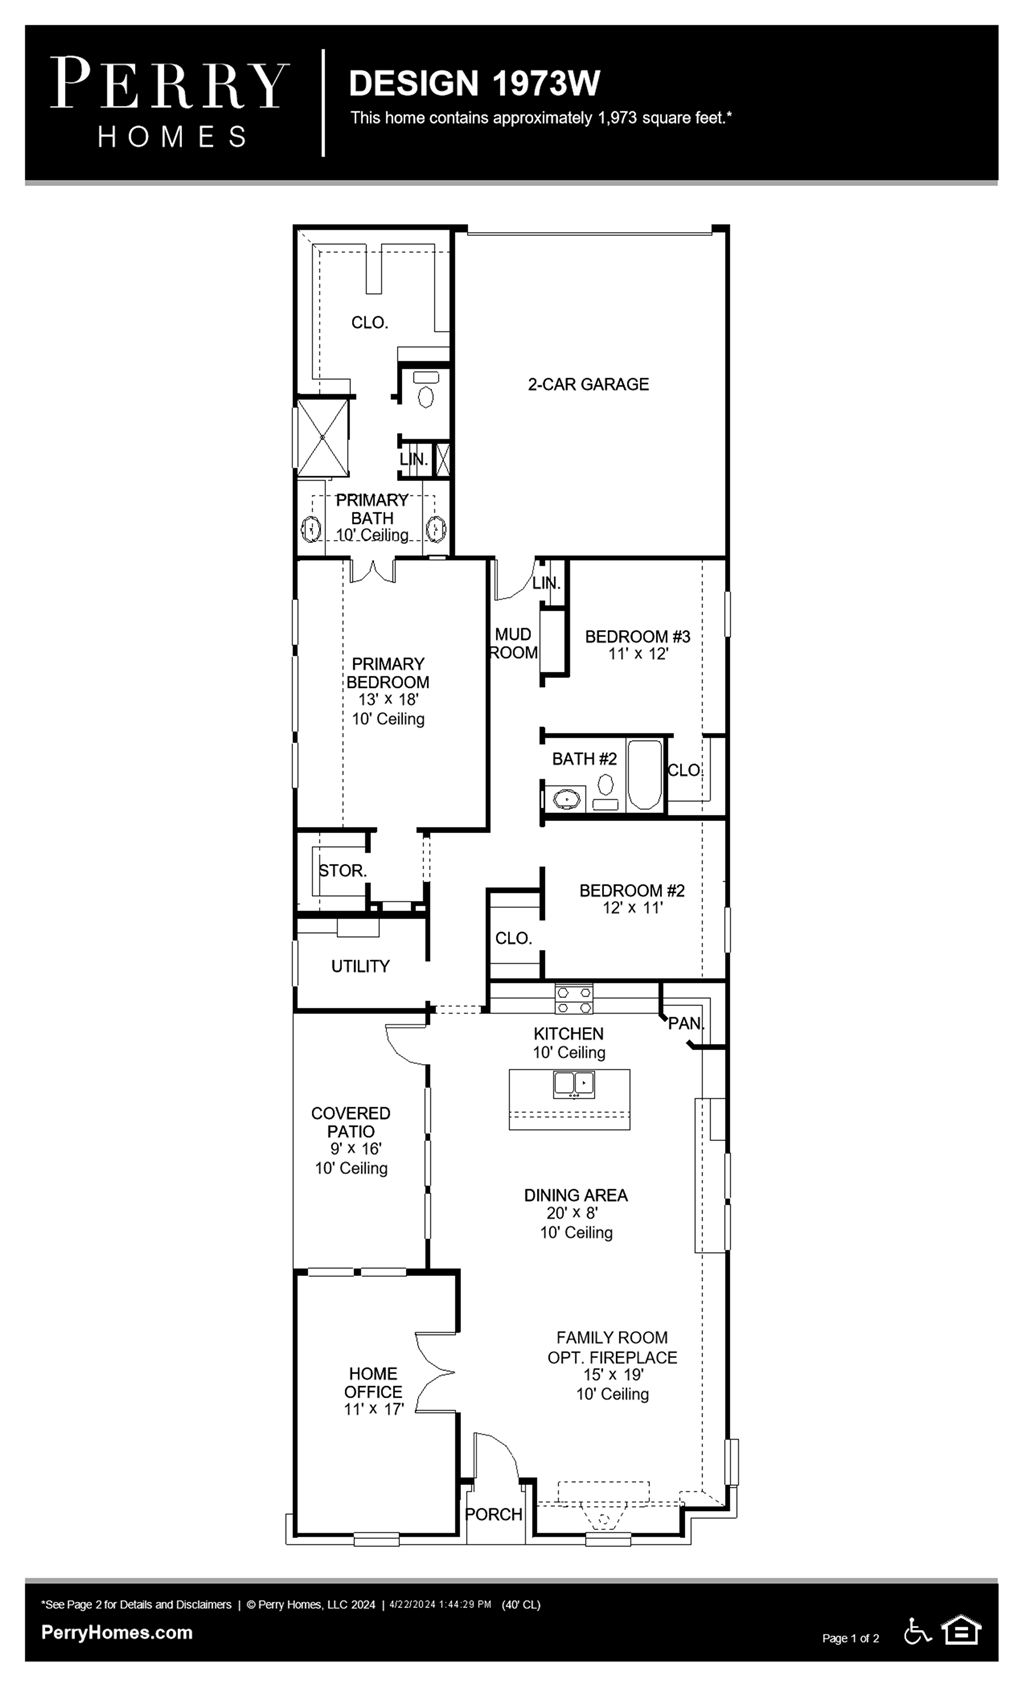 Floor Plan for 1973W